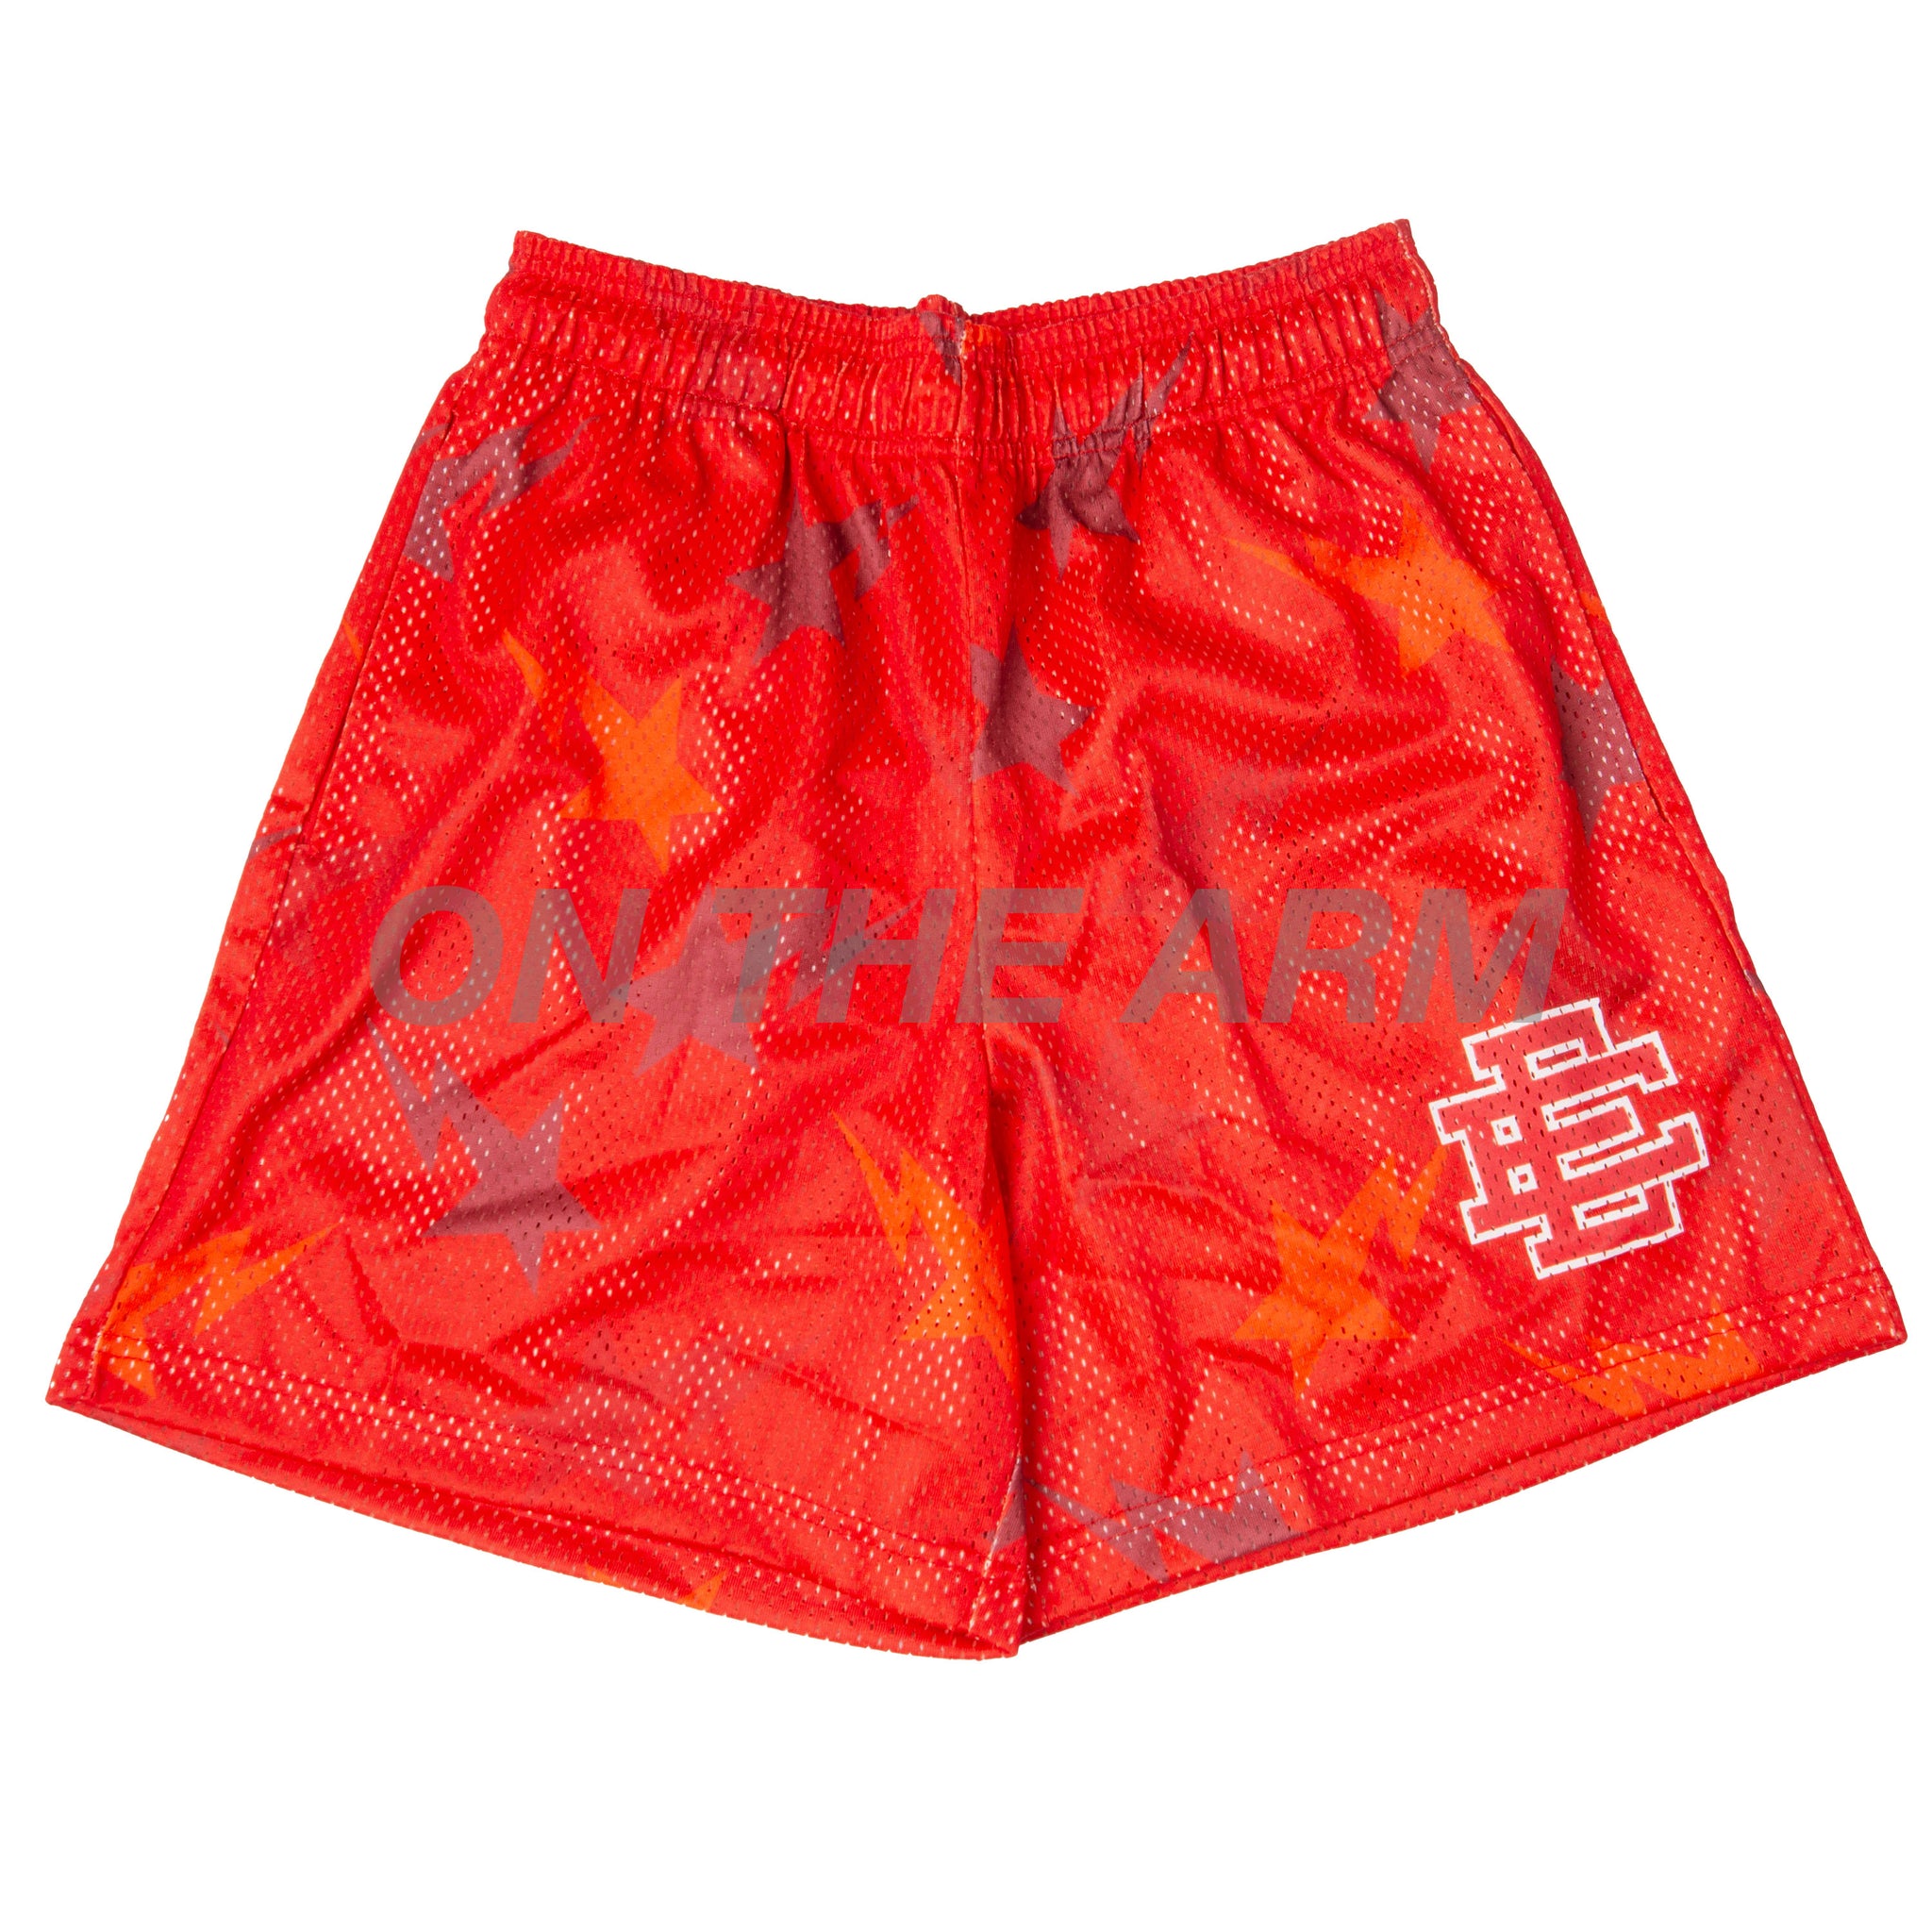 Bape Red Eric Emanuel Basic Shorts